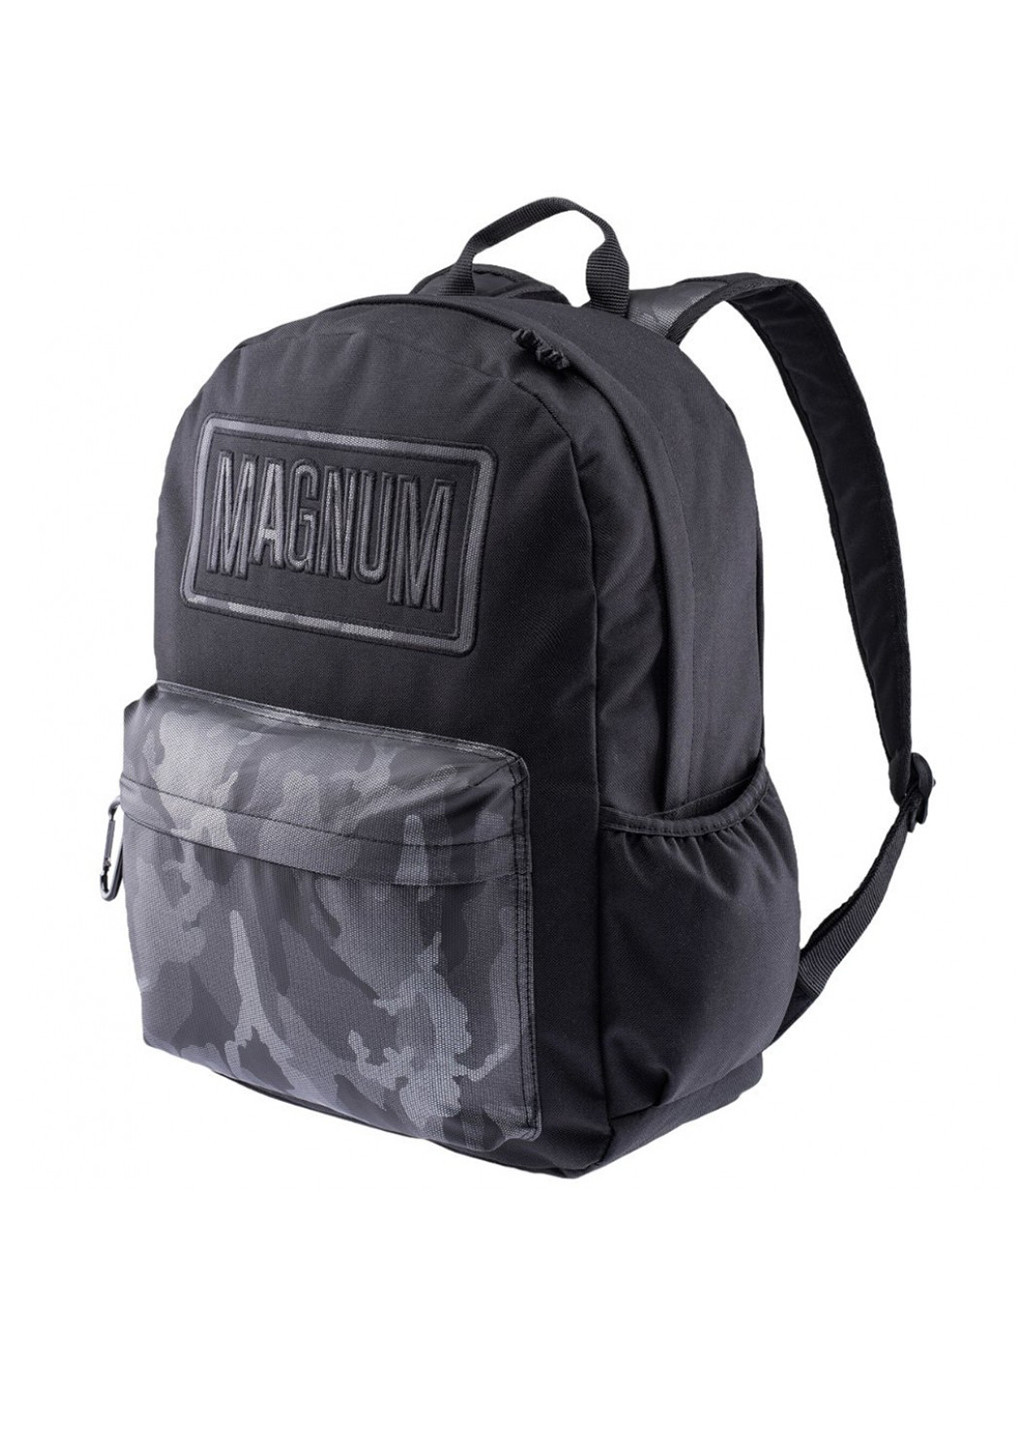 Рюкзак Magnum magnum corps-black/silver camo (254552234)